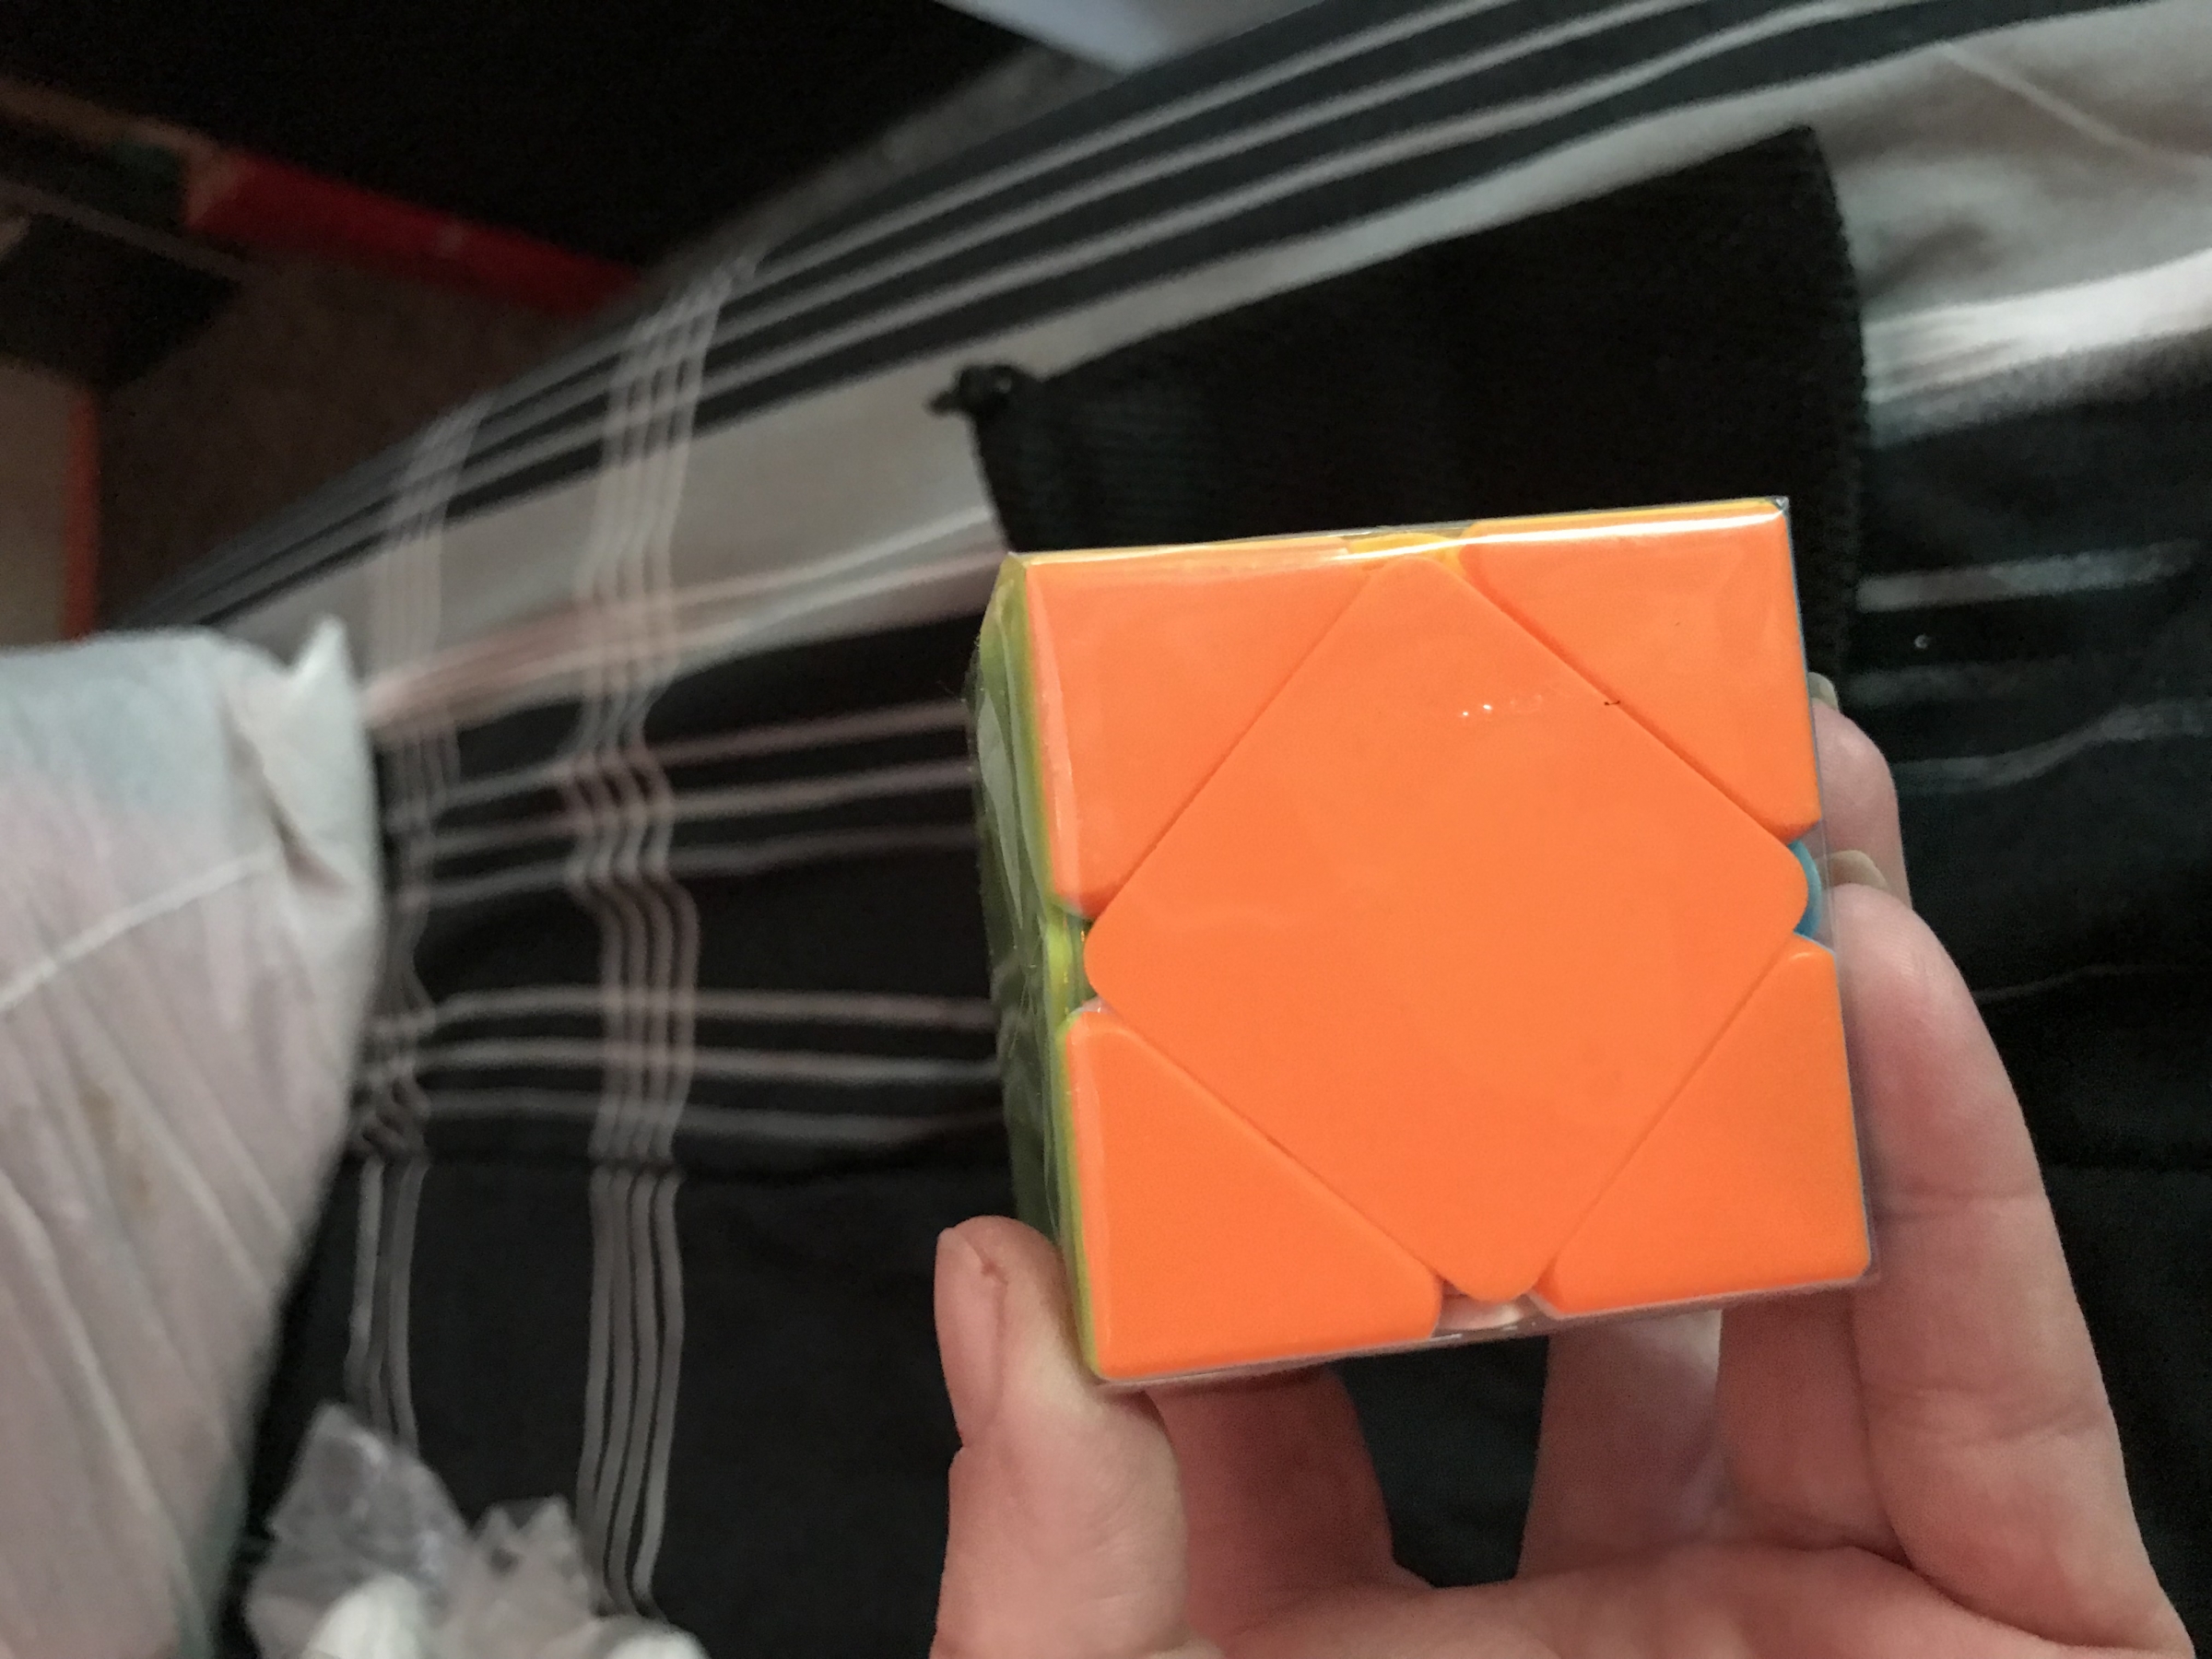 Cool stickerless magic cube!